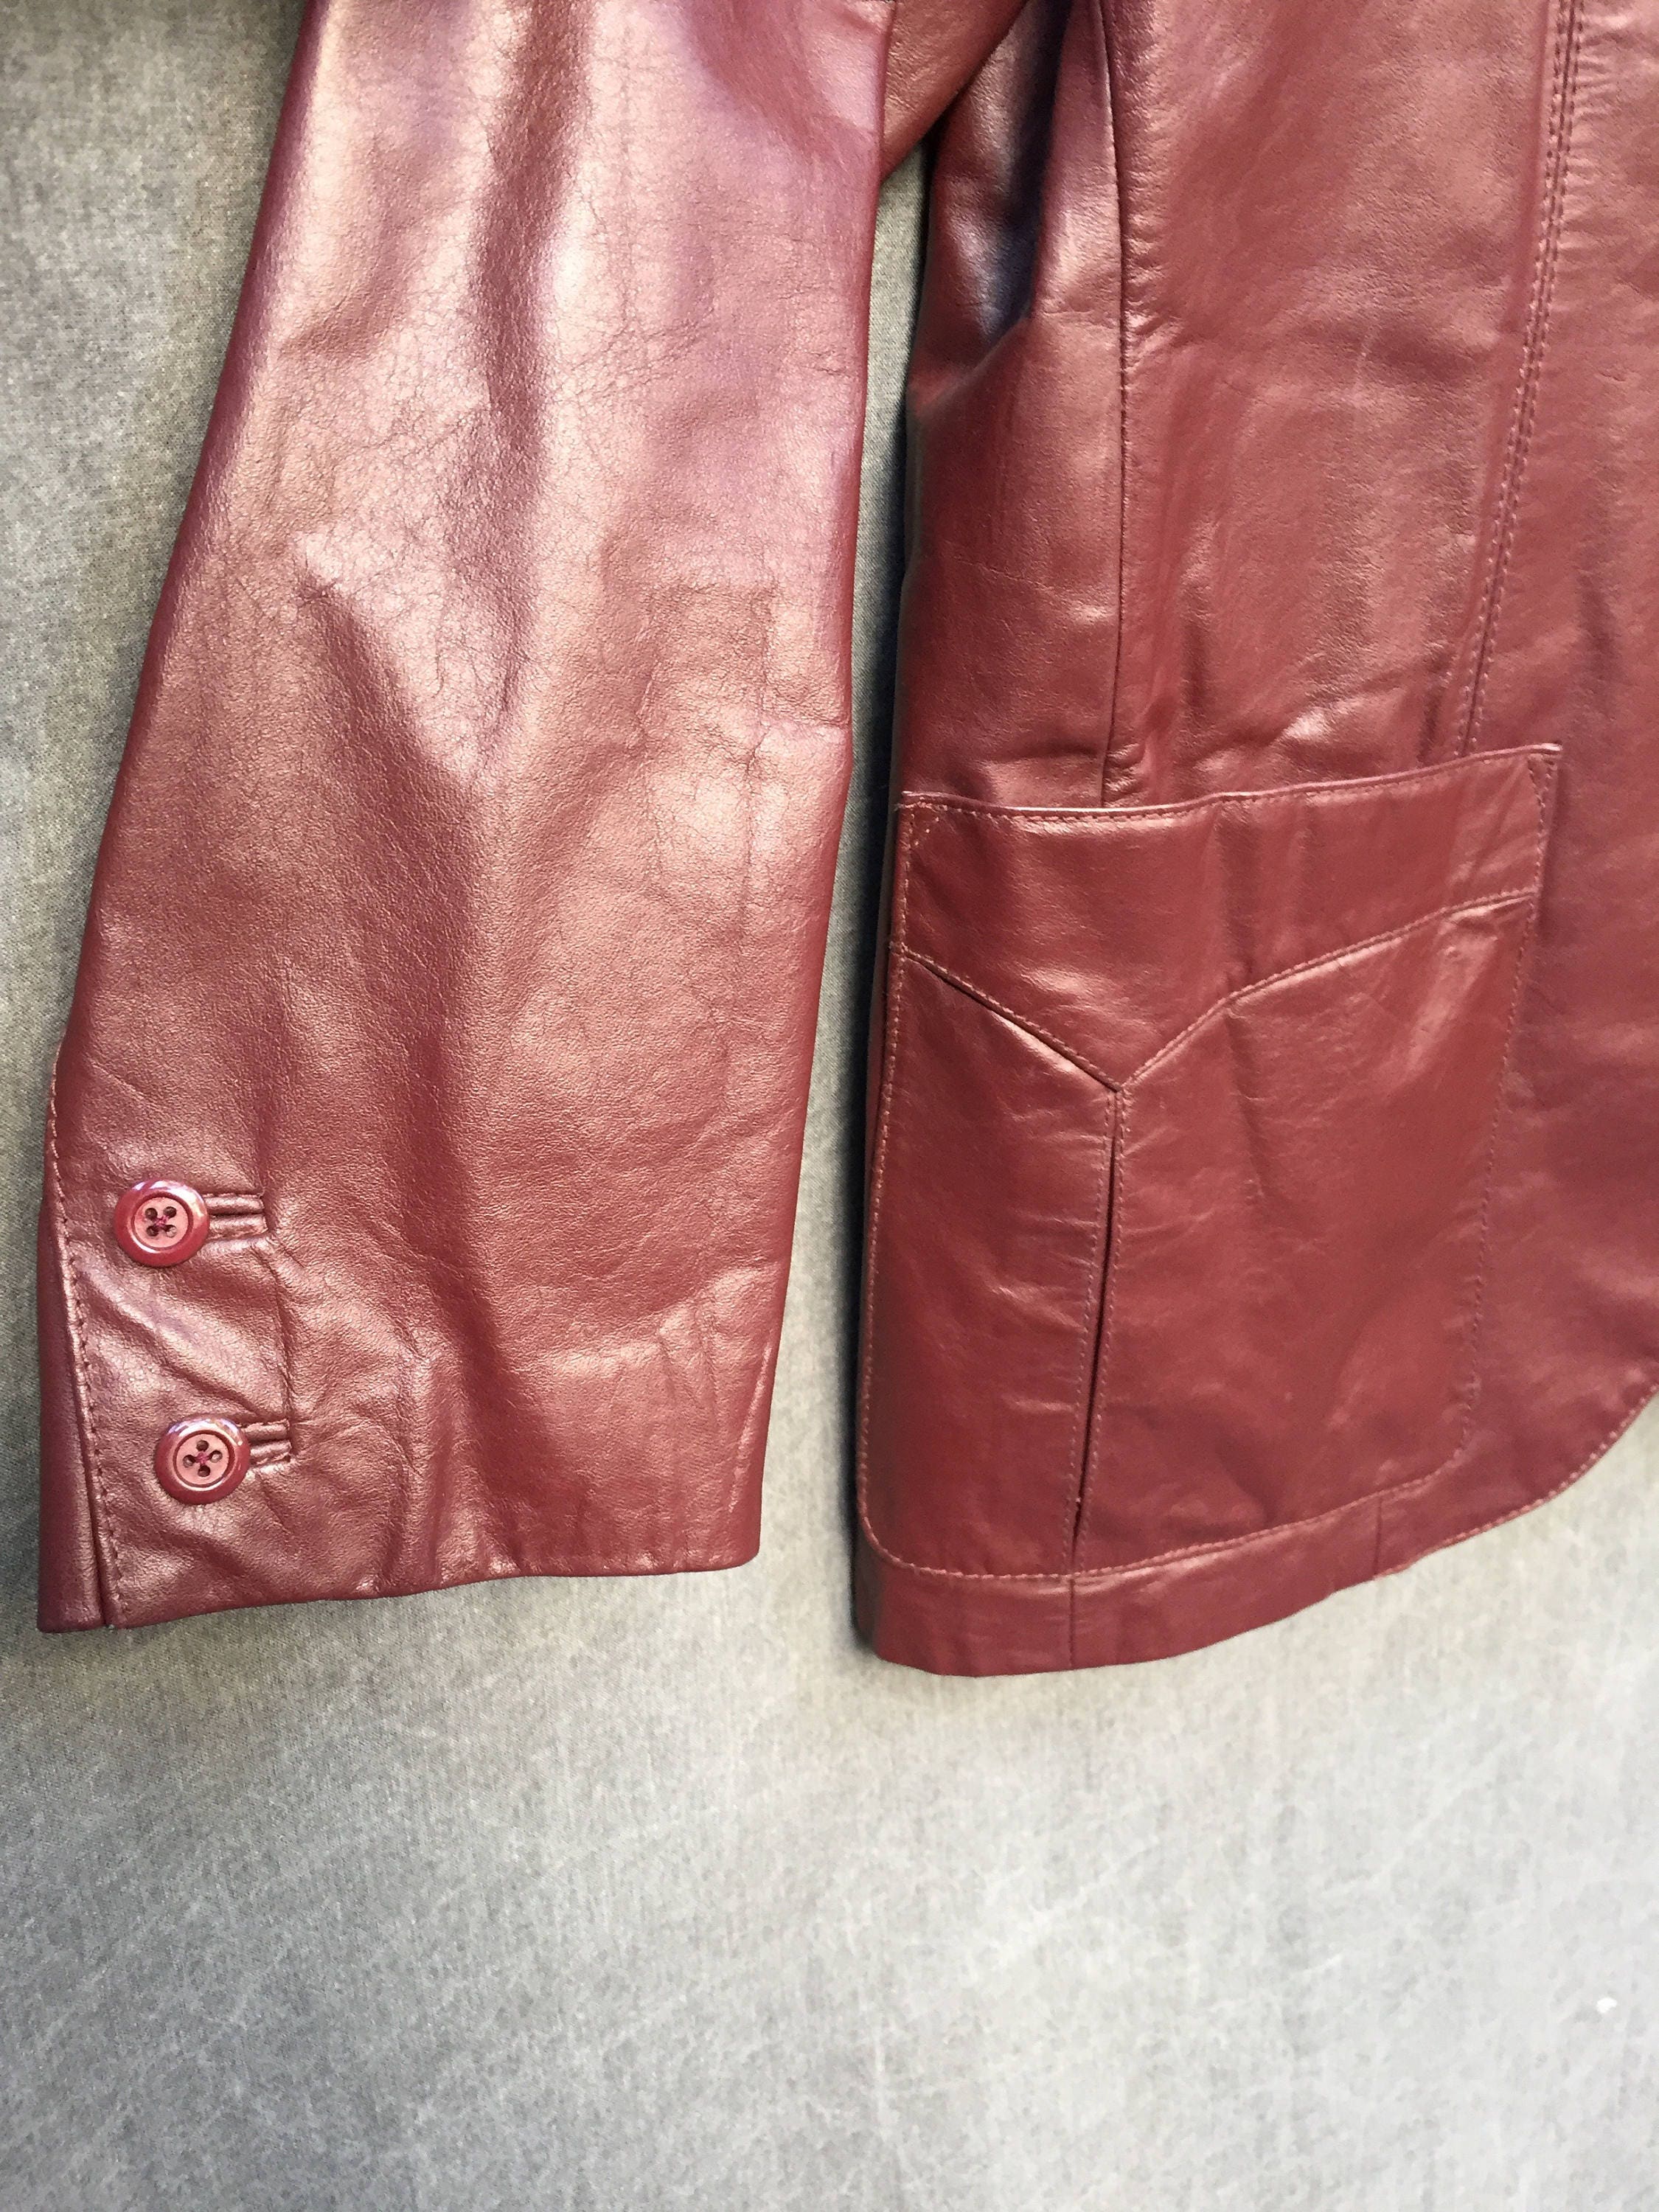 70's Etienne Aigner Oxblood Mod Leather Jacket // | Etsy